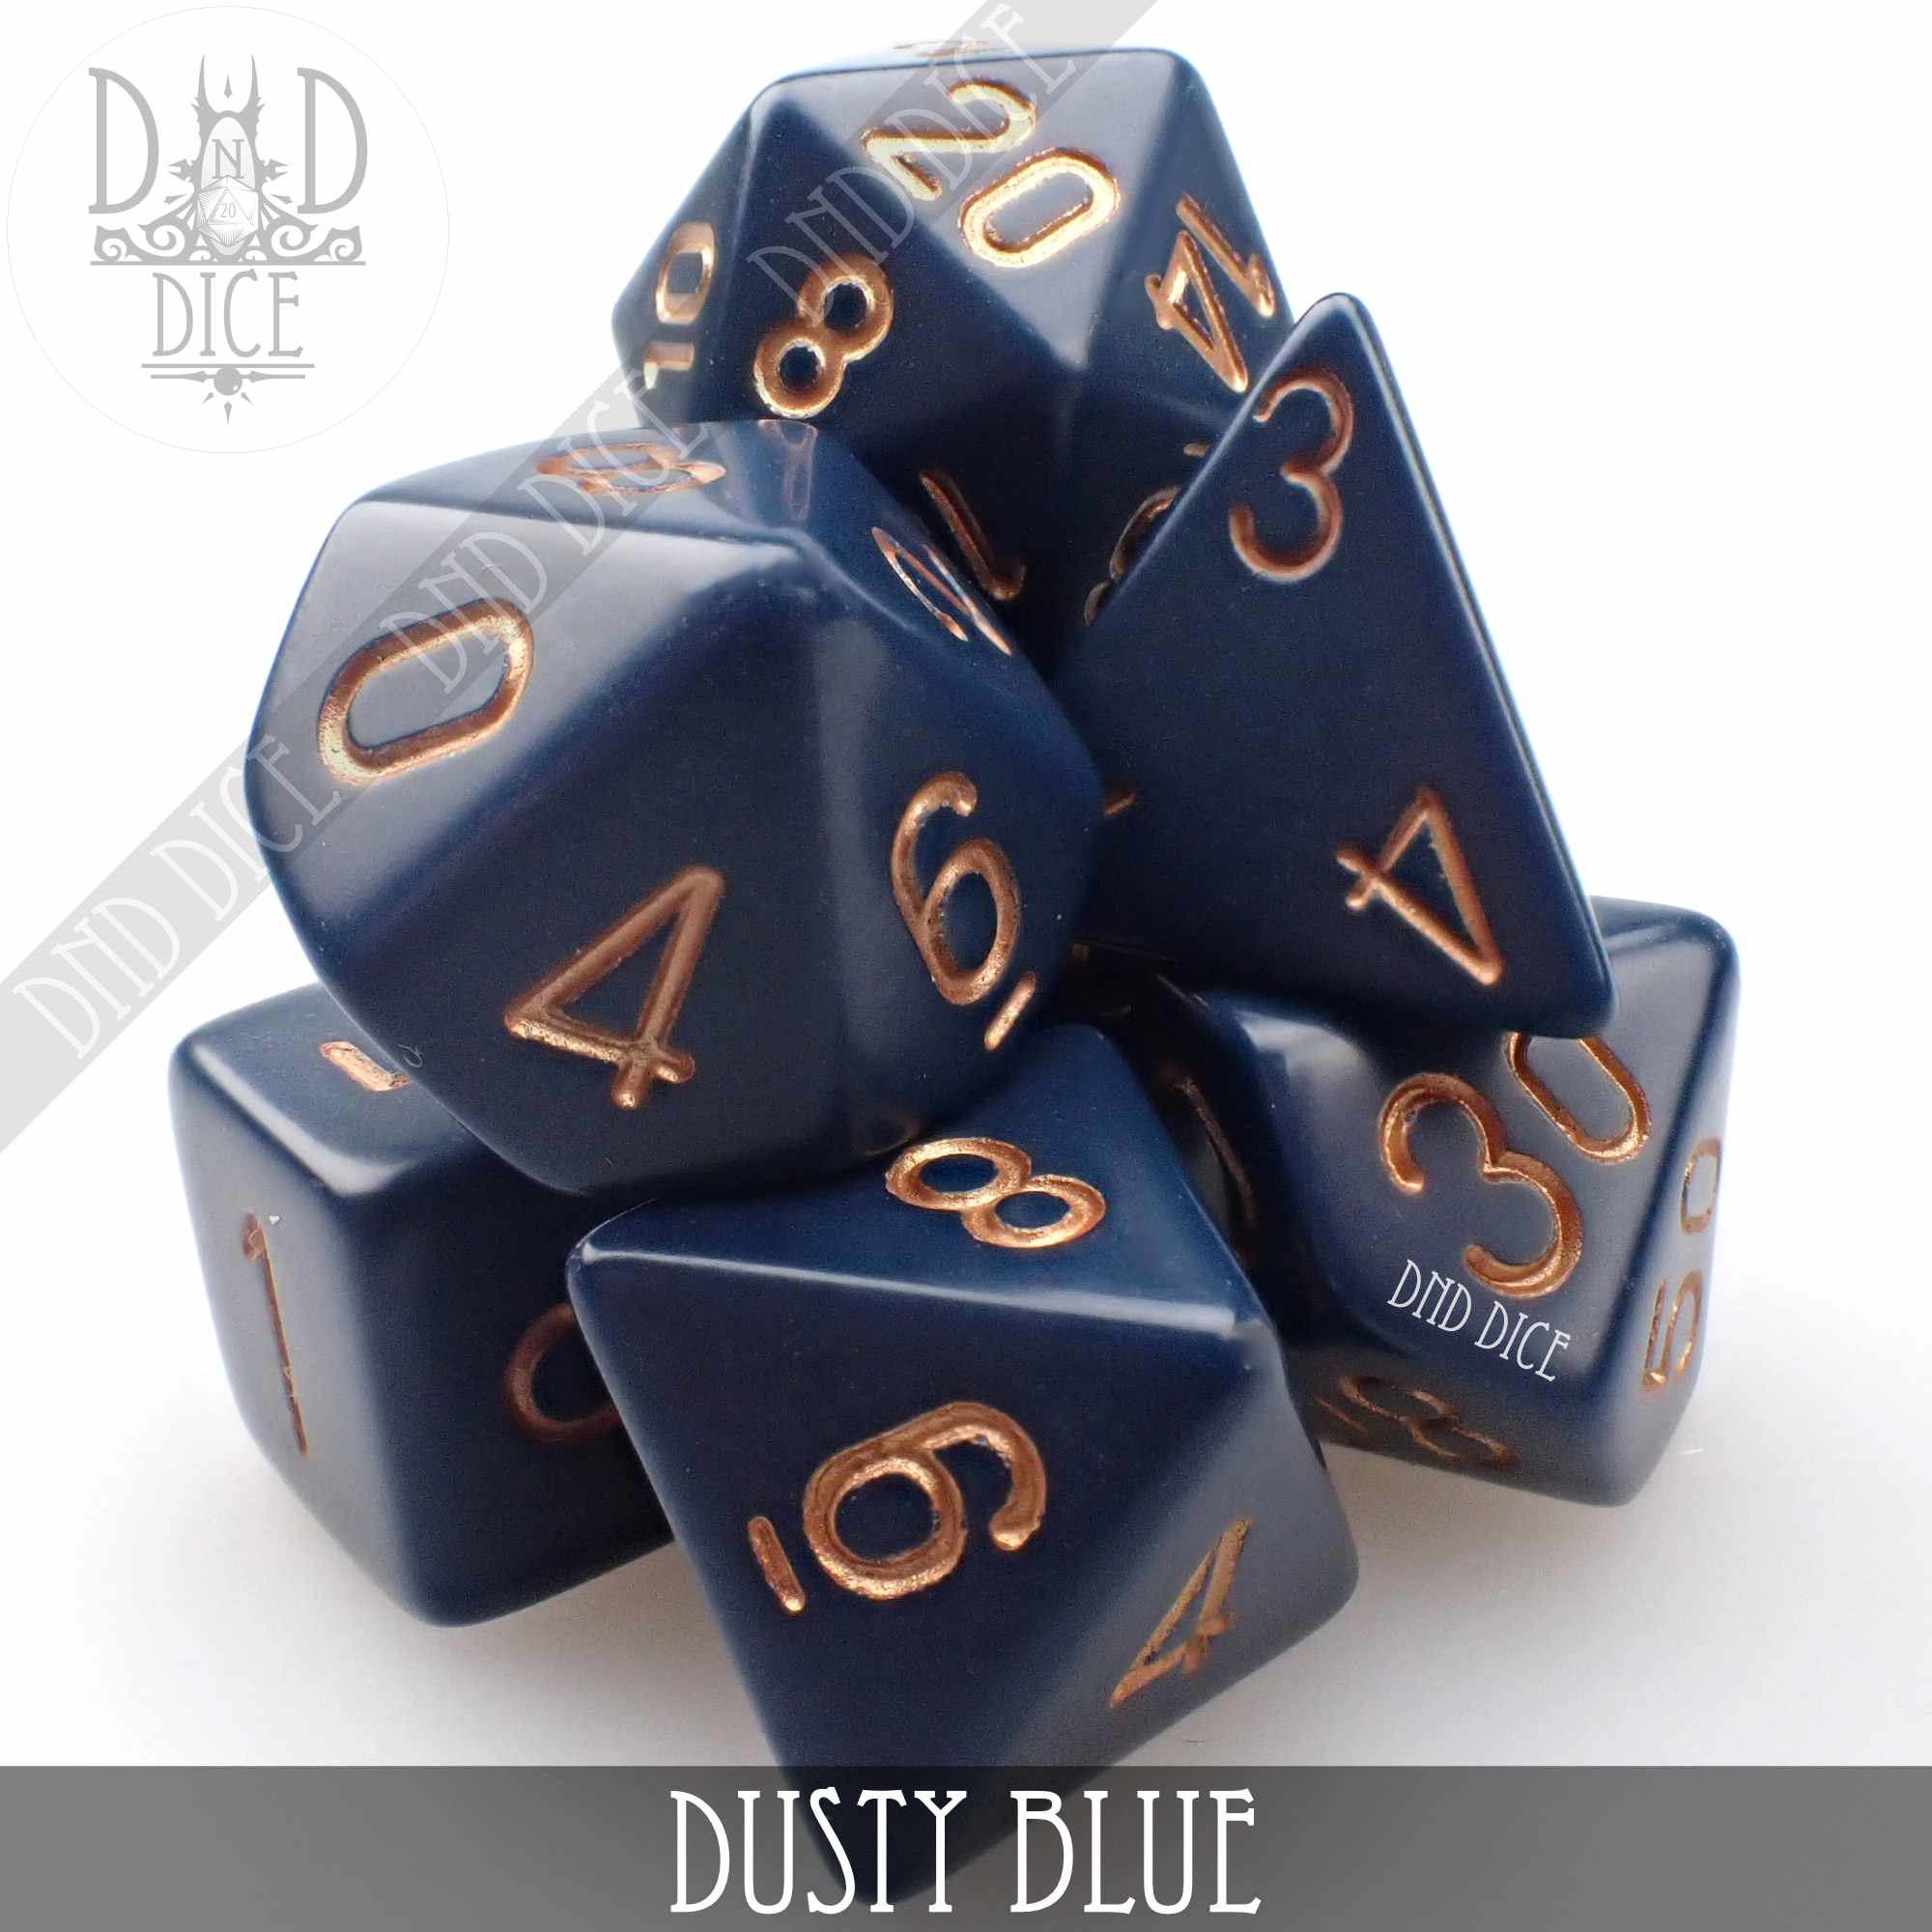 Dusty Blue Build Your Own Set